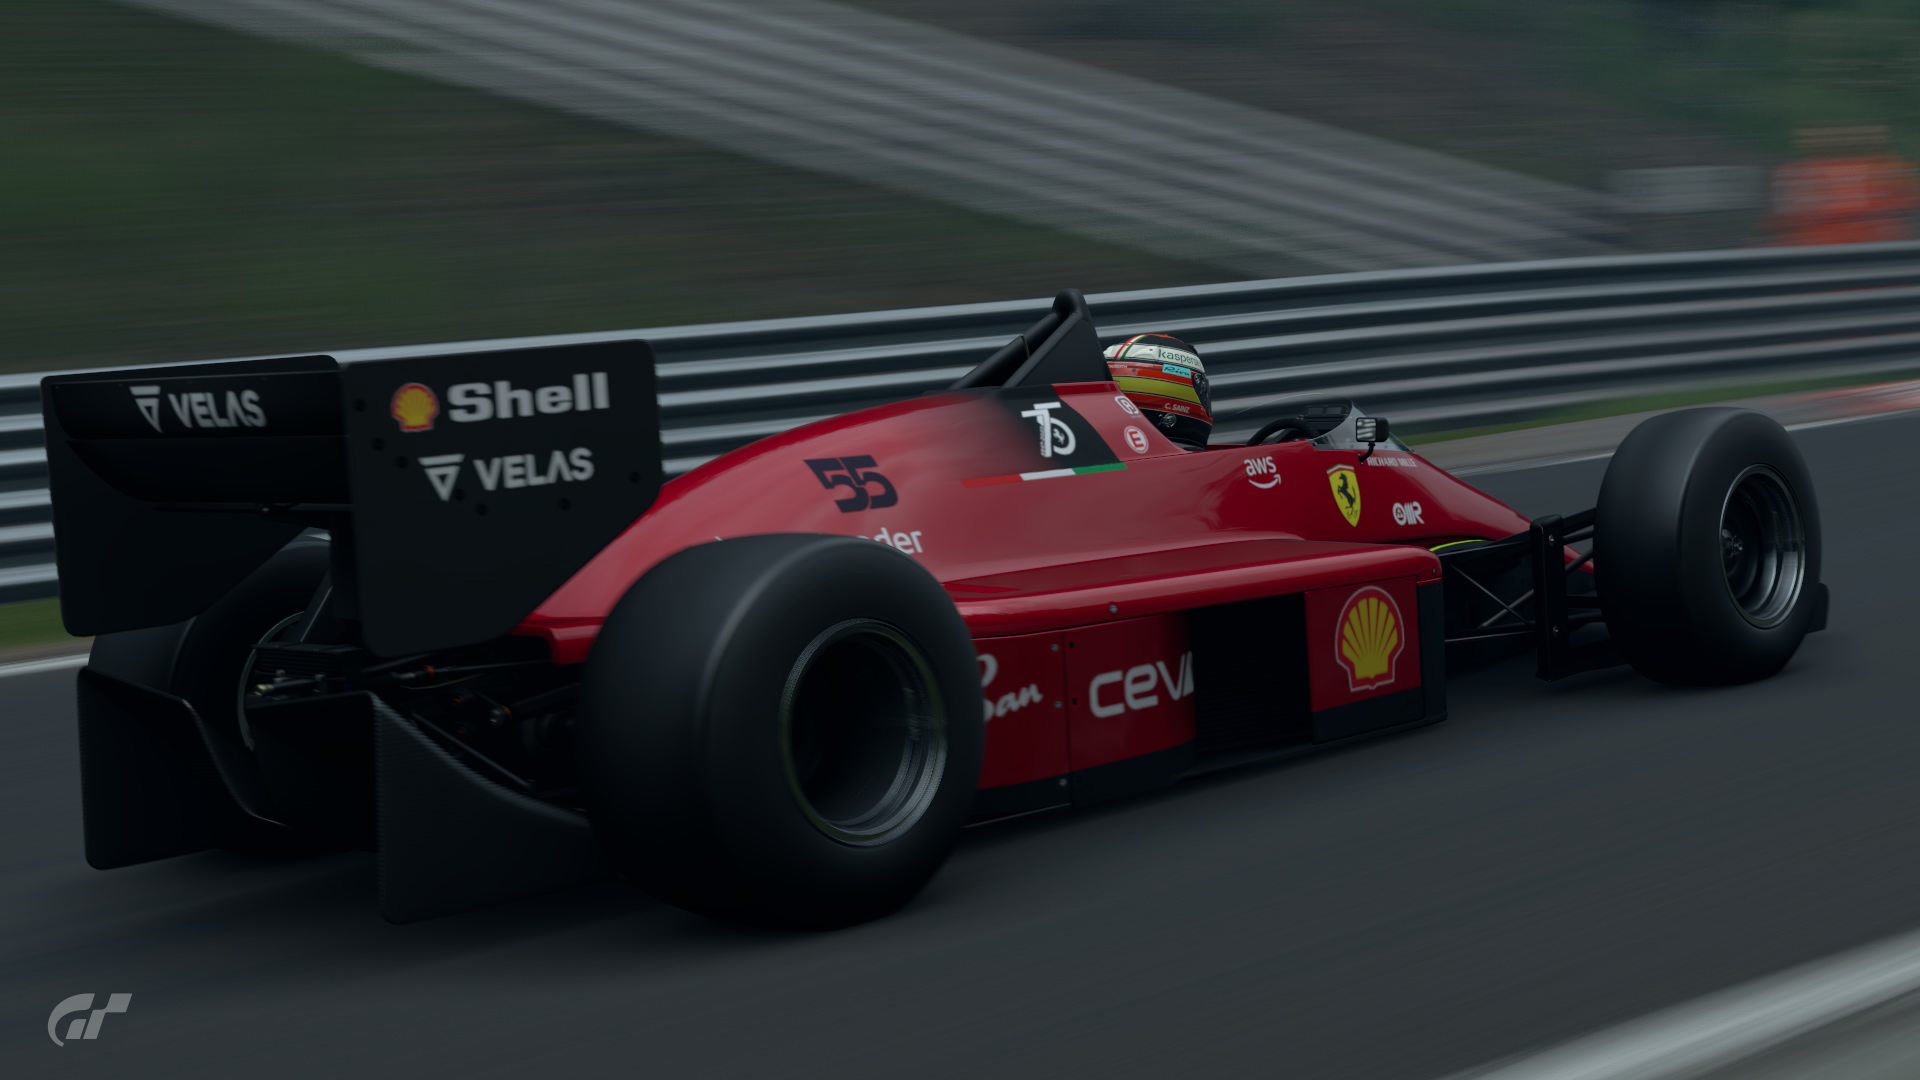 Video Games Formula 1 Nurburgring Vehicle Race Cars Racing Driving Watermarked Motion Blur Ferrari C 1920x1080